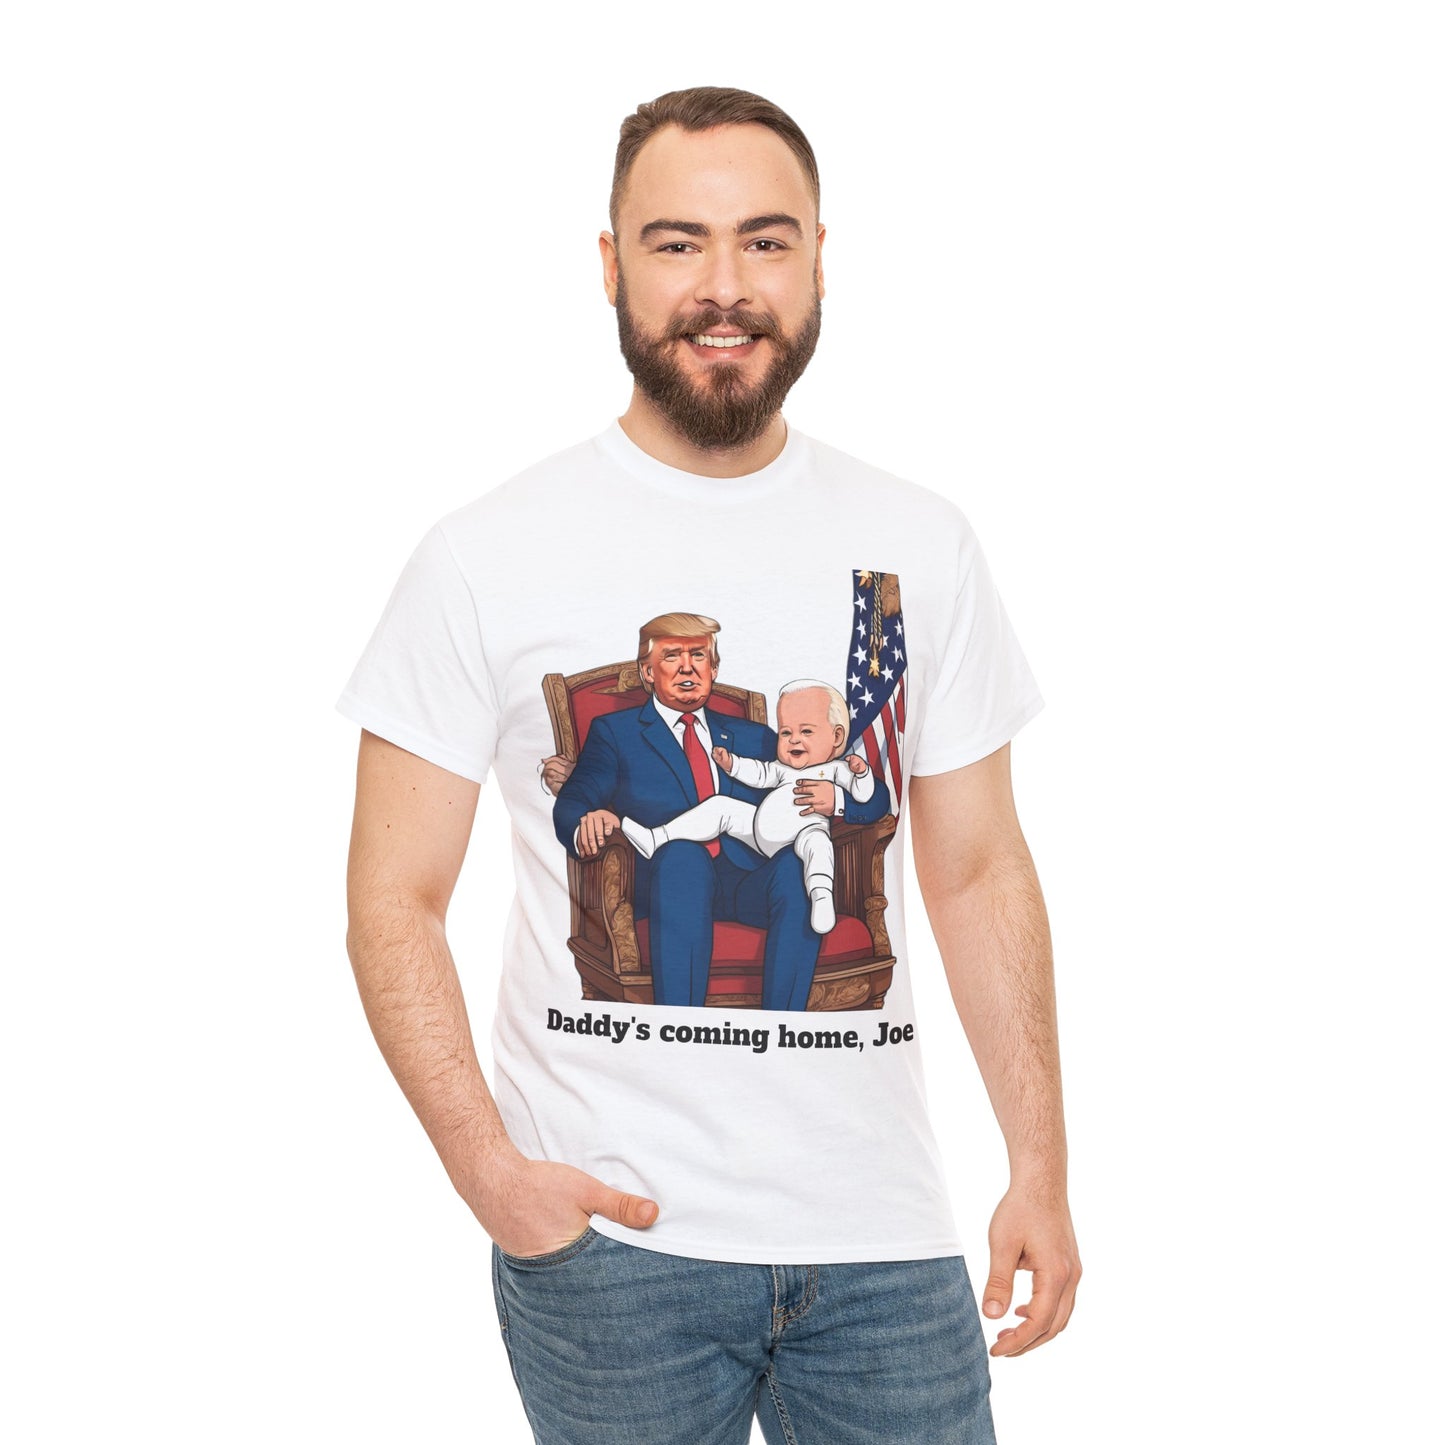 "Daddy's coming home, Joe" T-Shirt